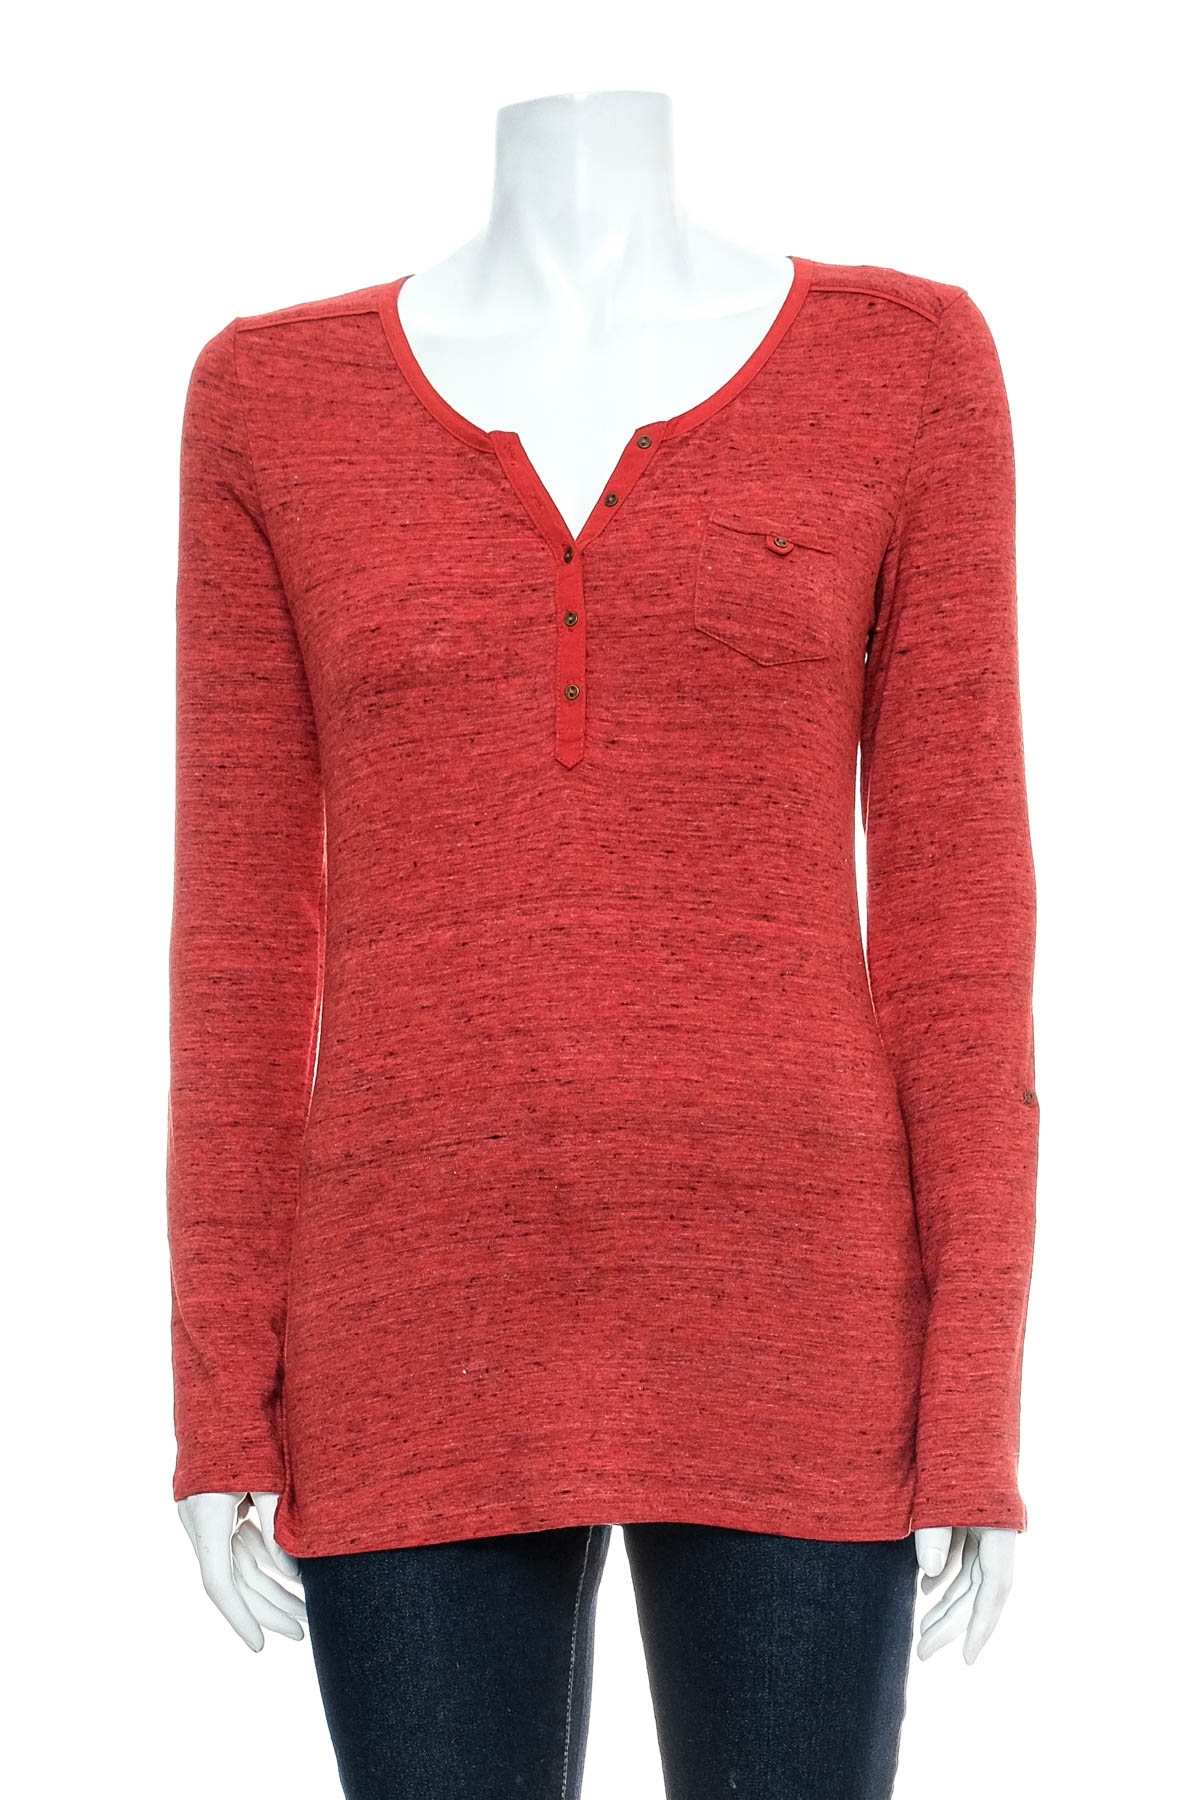 Women's sweater - Tally Weijl - 0